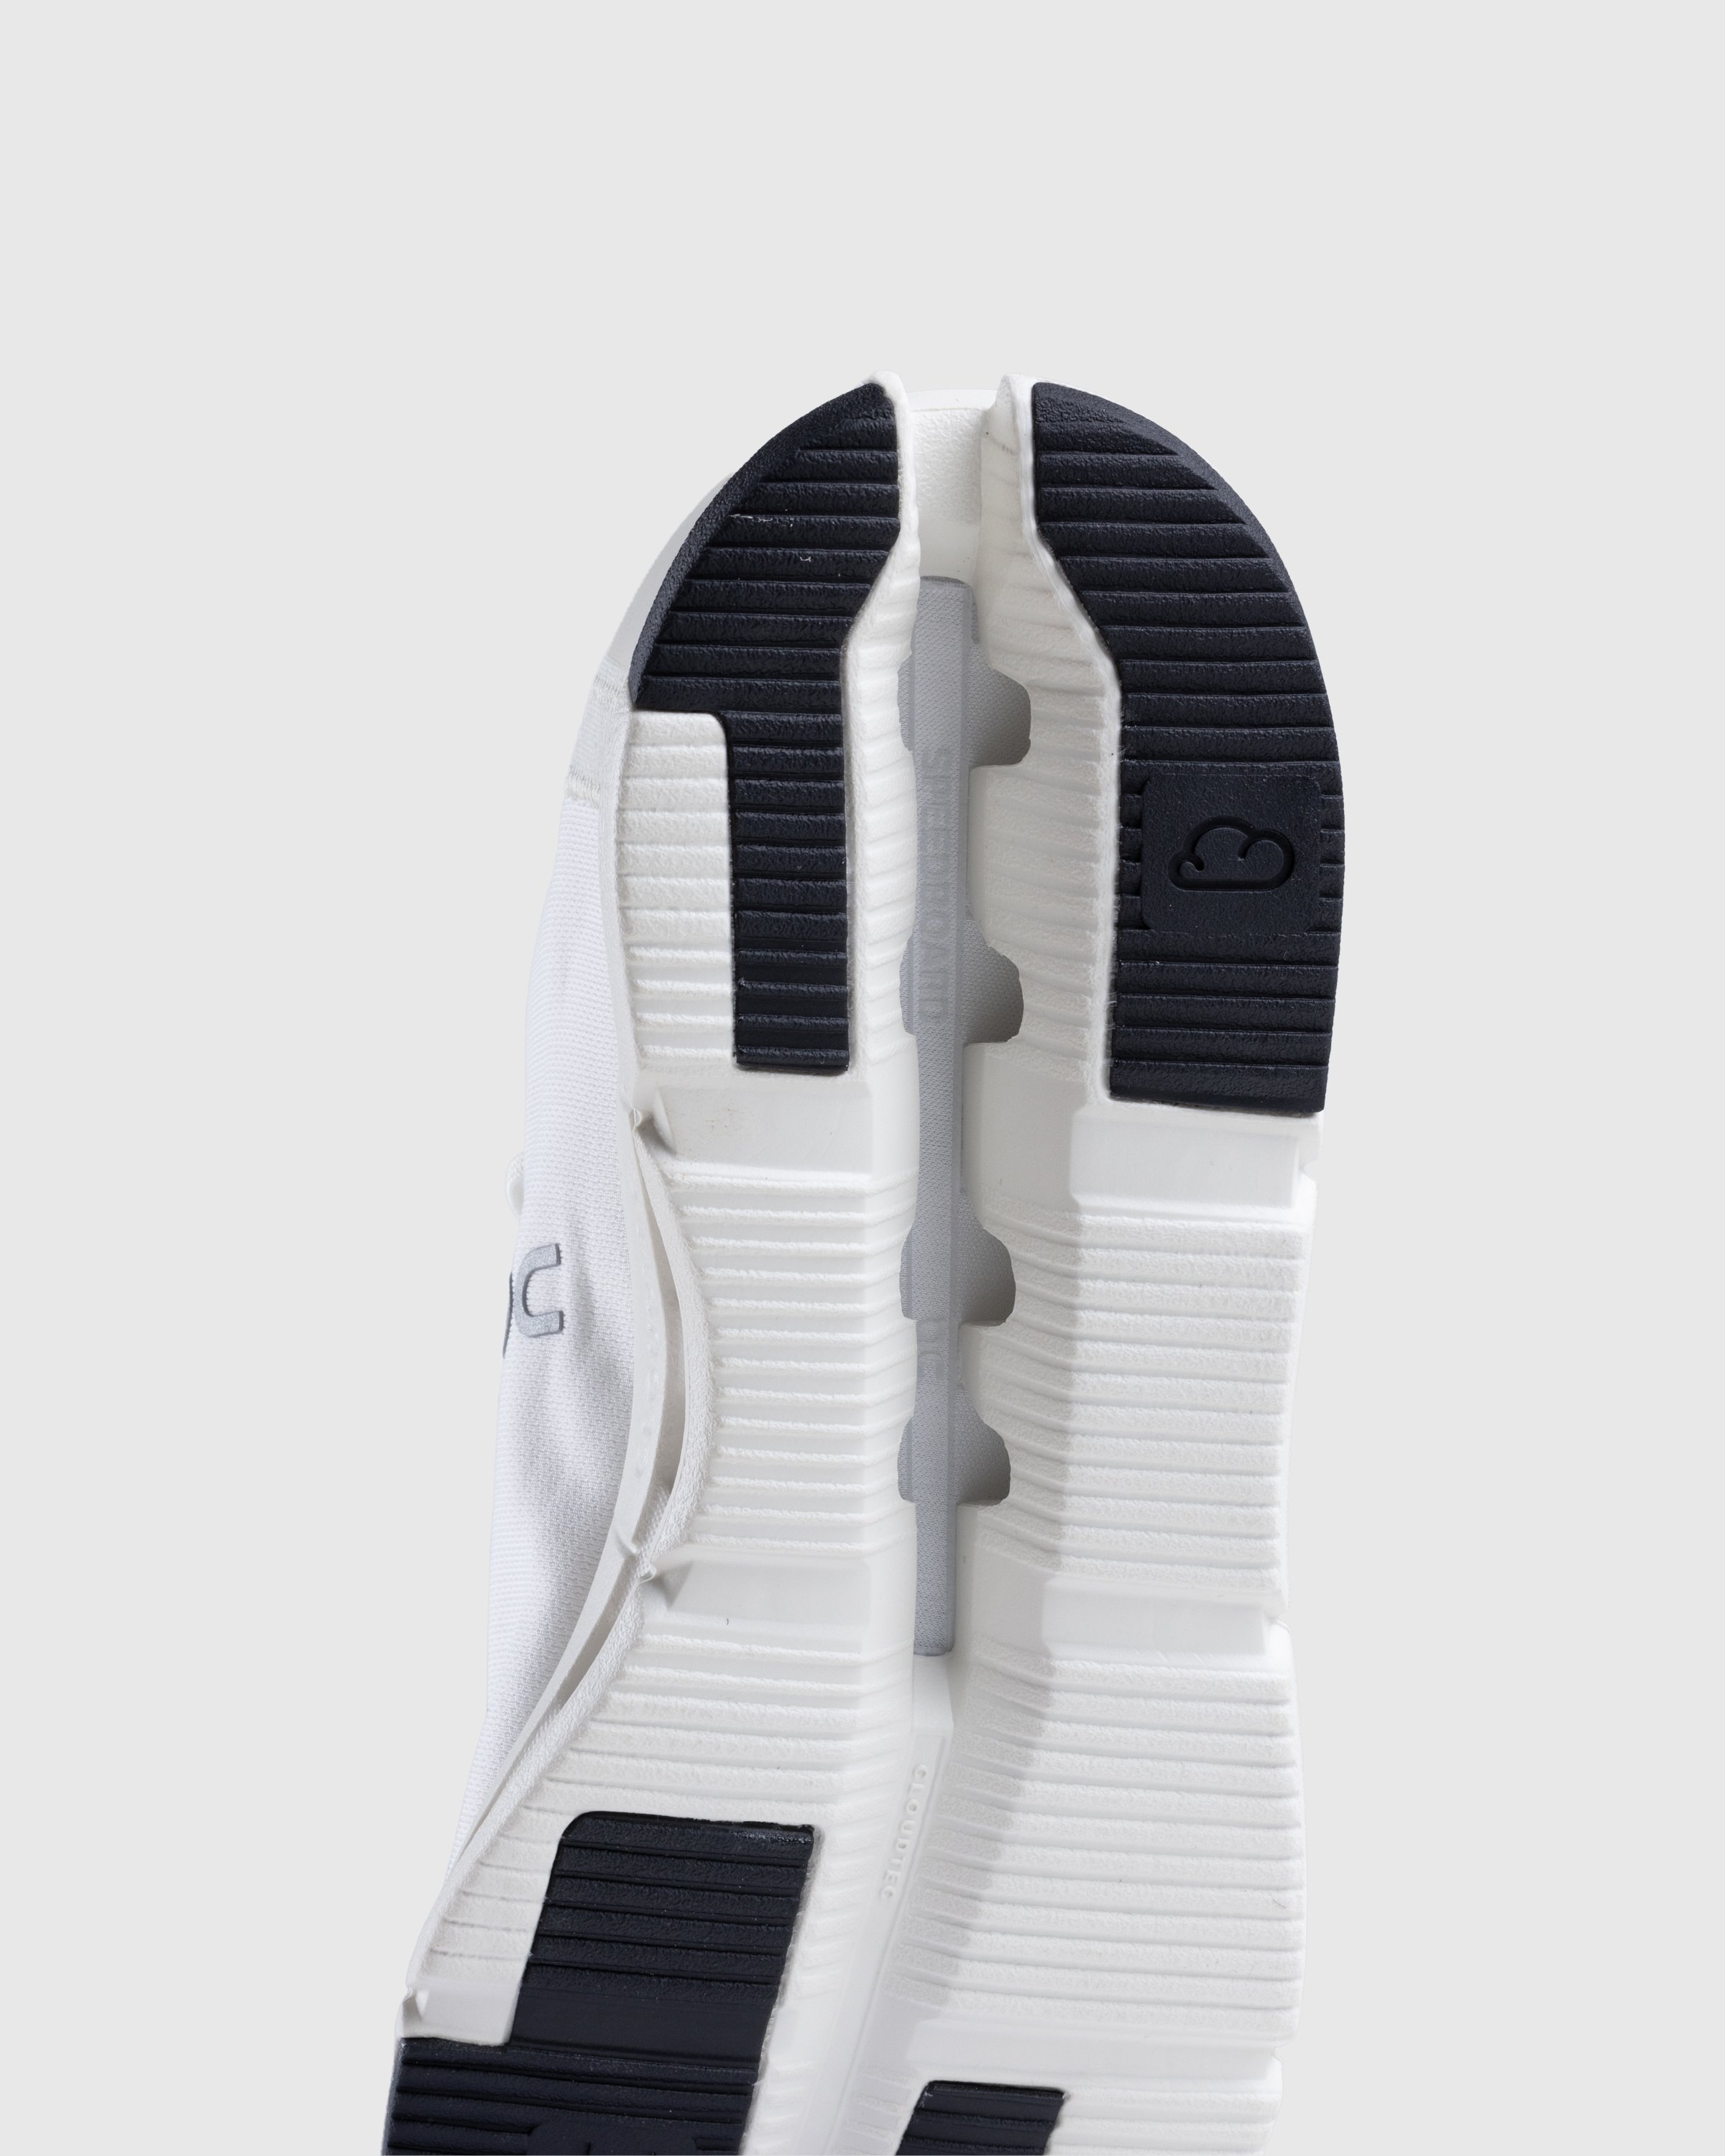 On - PAD Cloudnova Form 1 M White Eclipse - Footwear - Multi - Image 5